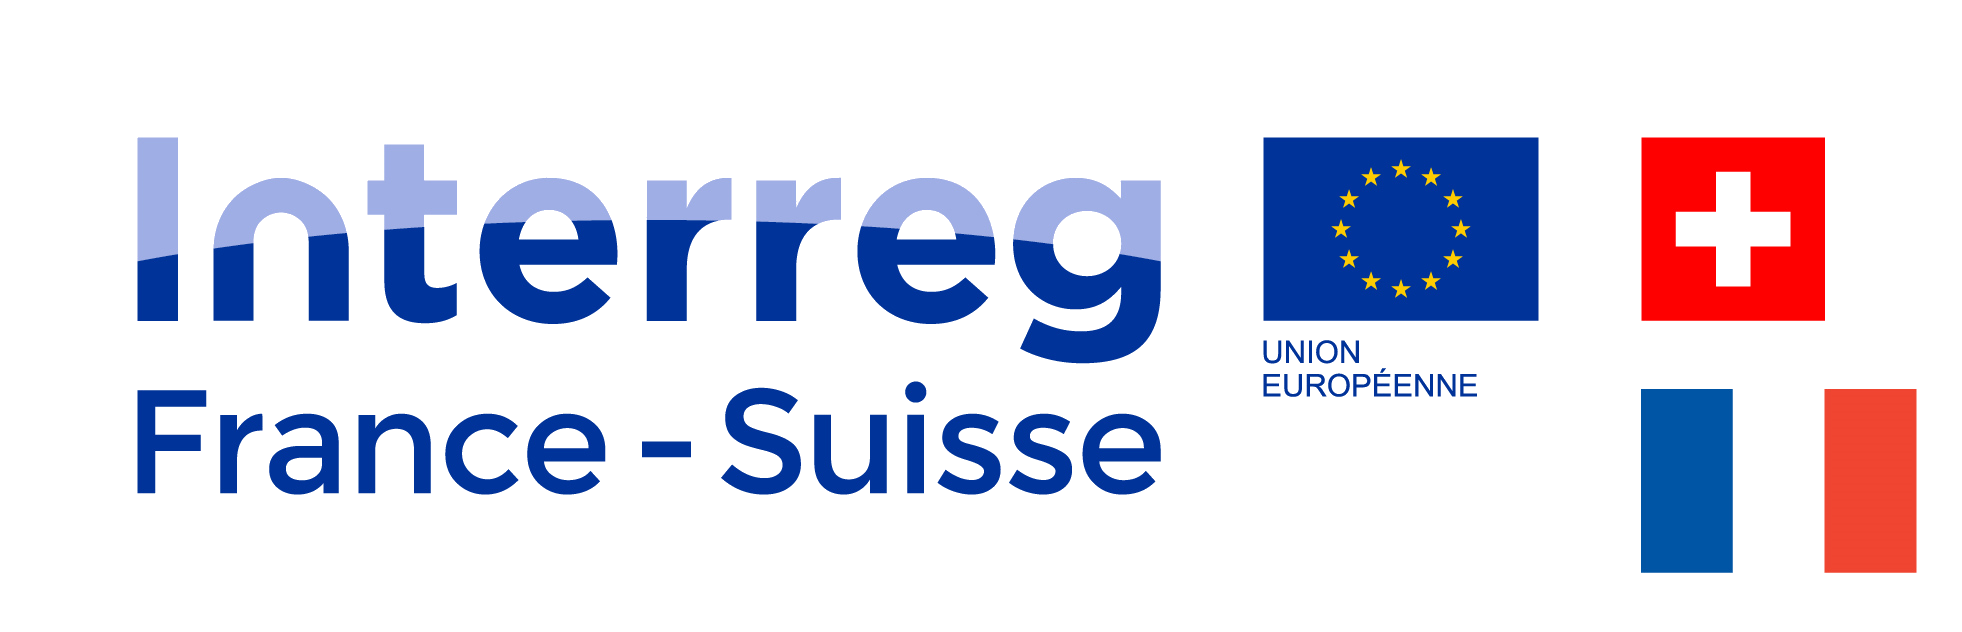 interreg_France-Suisse_RVB